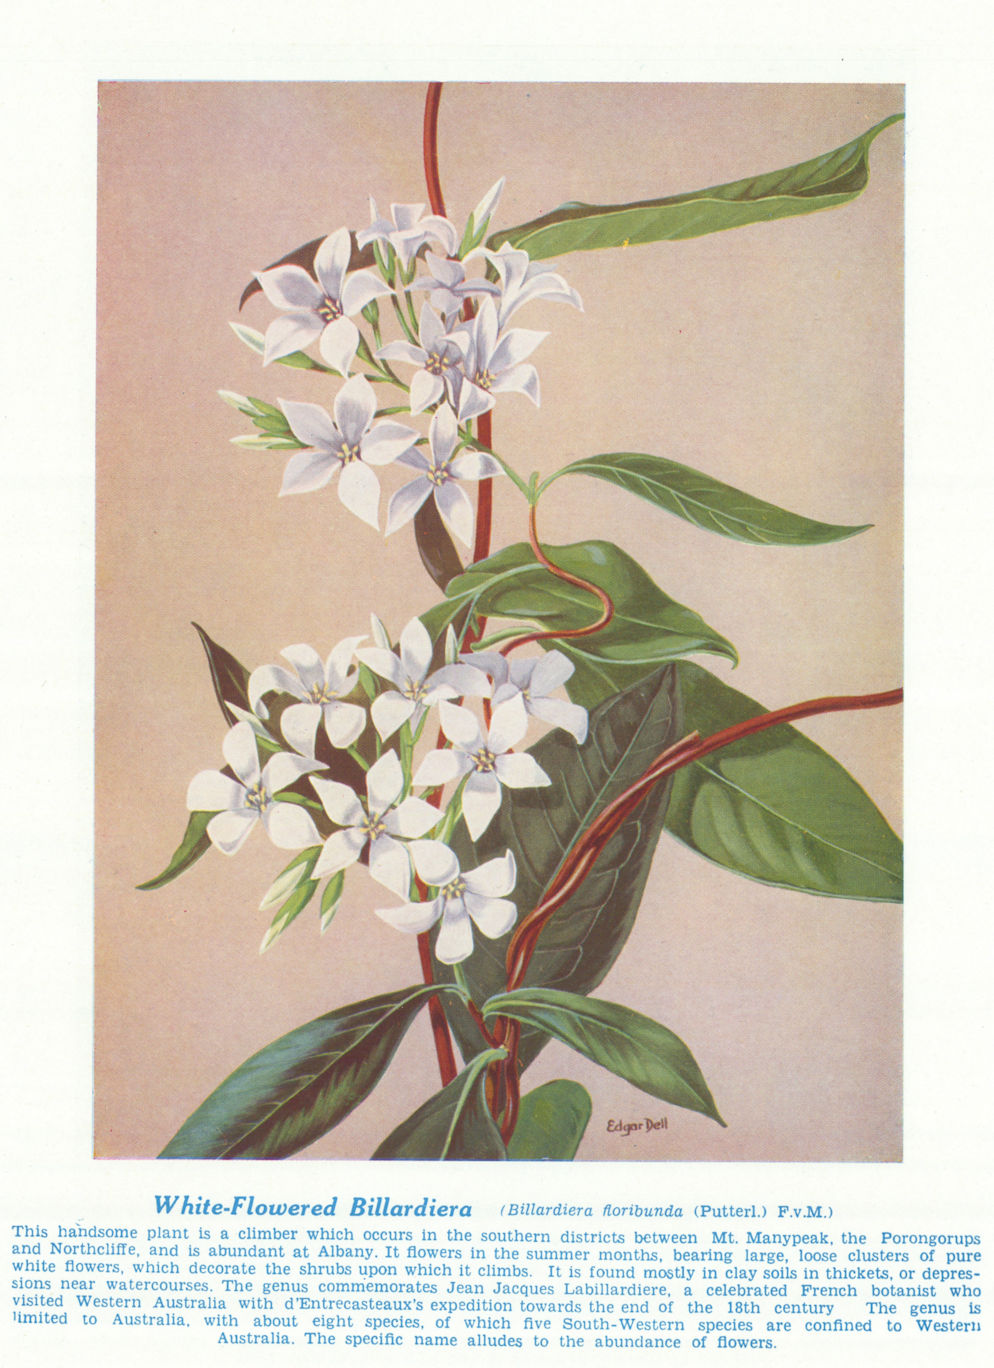 Associate Product White-flowered Billiardiera (Billardiera floribunda) Australian Wild Flower 1950